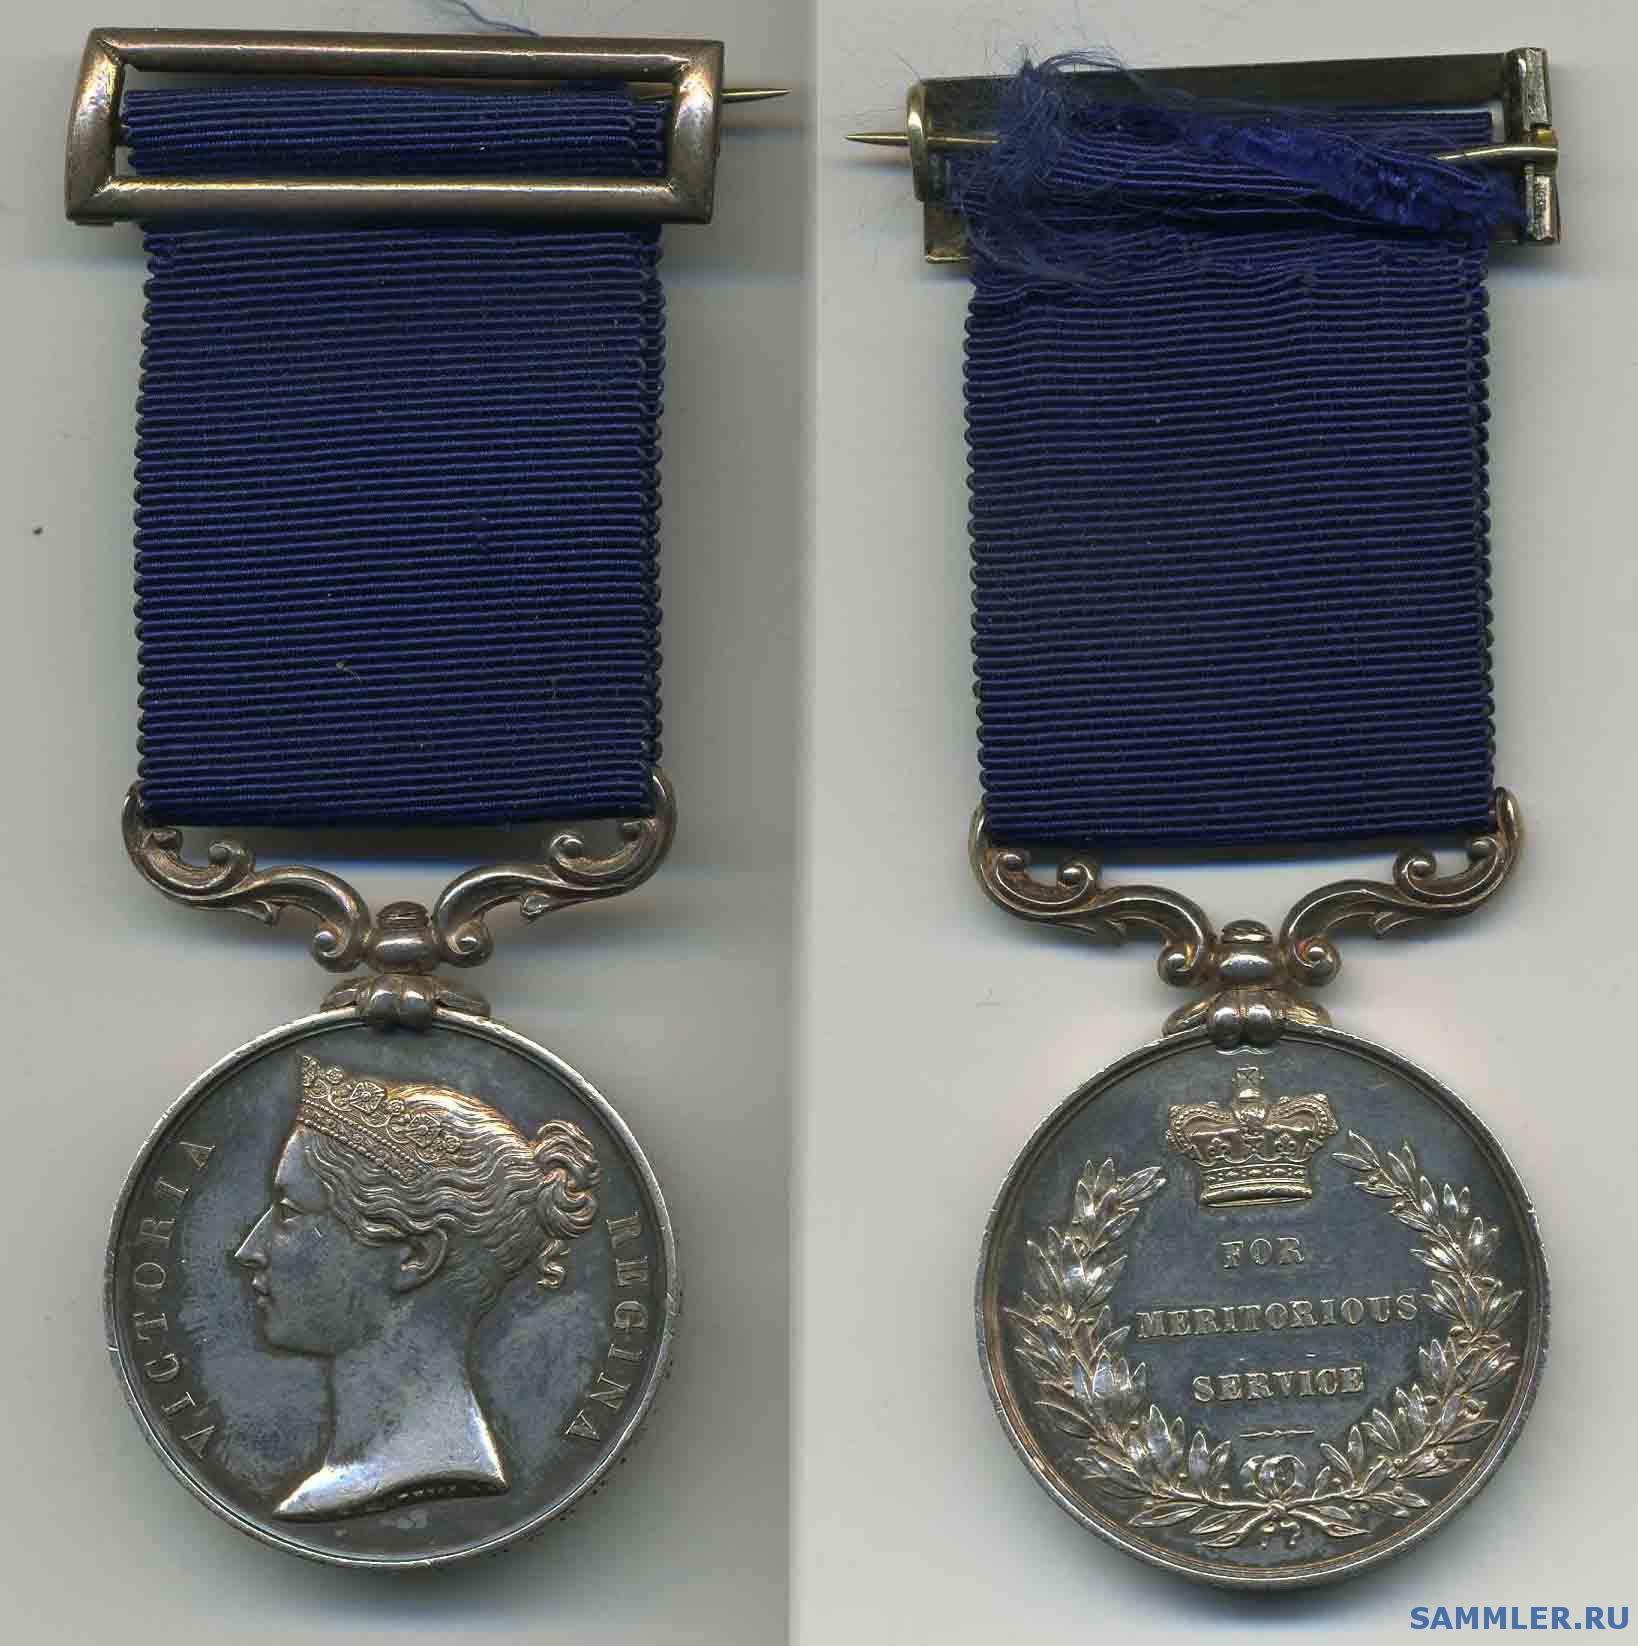 Meritourious_Service_Medal_RMLI.jpg